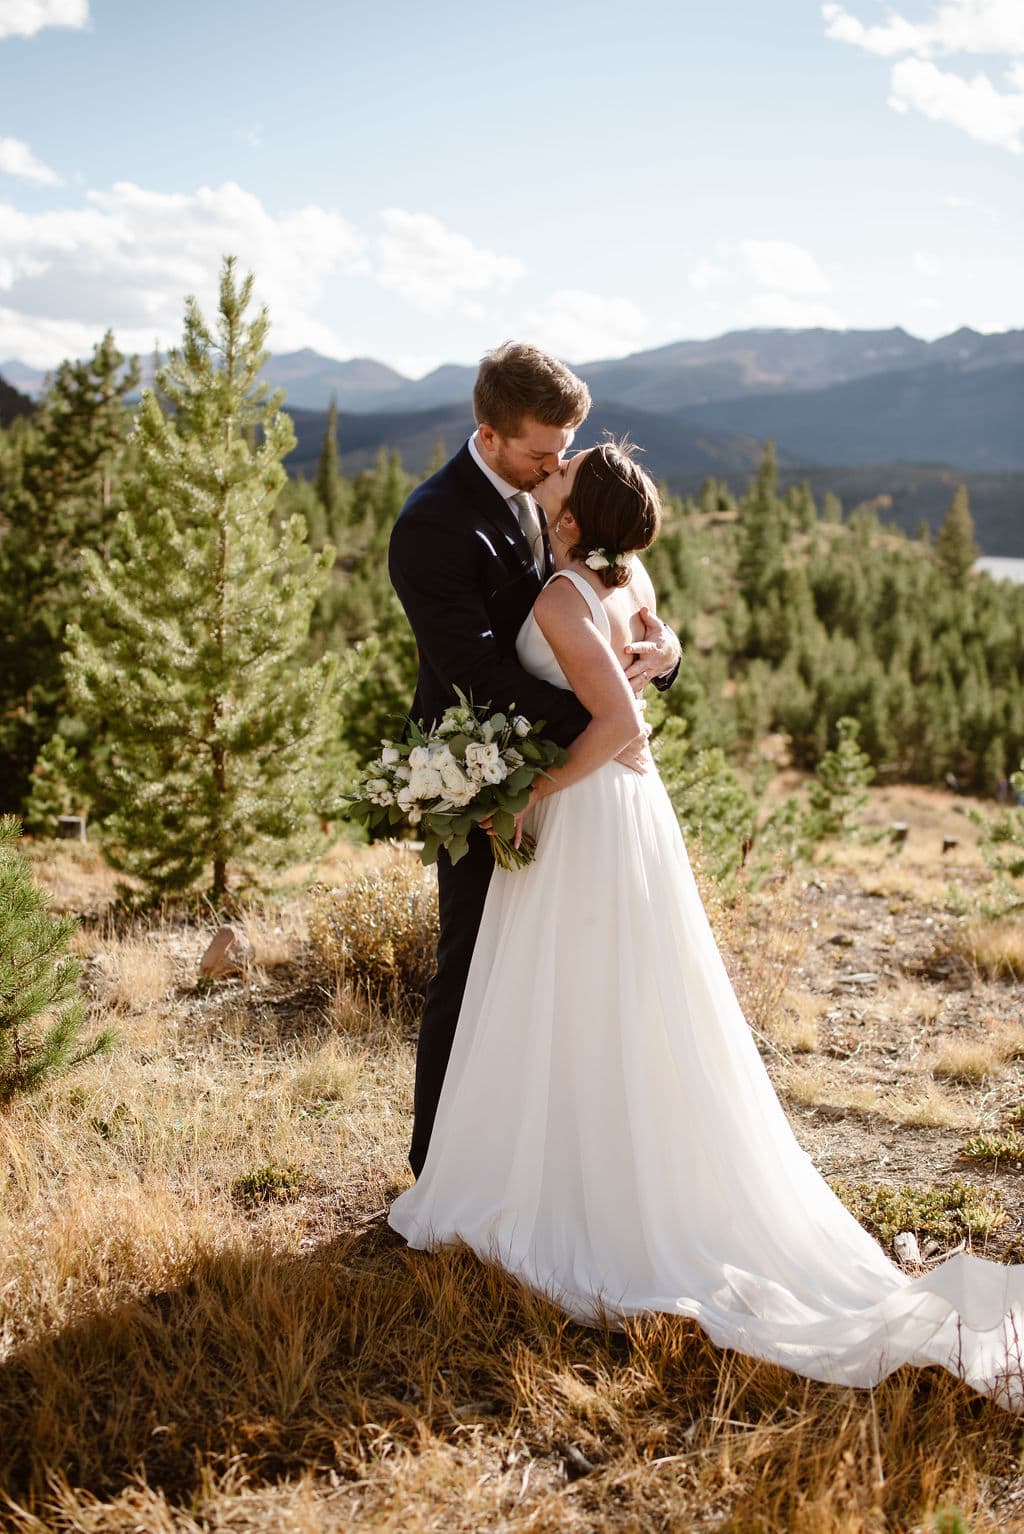 Romantic Bride and Groom Mountain Portraits at Lake Dillon in Colorado